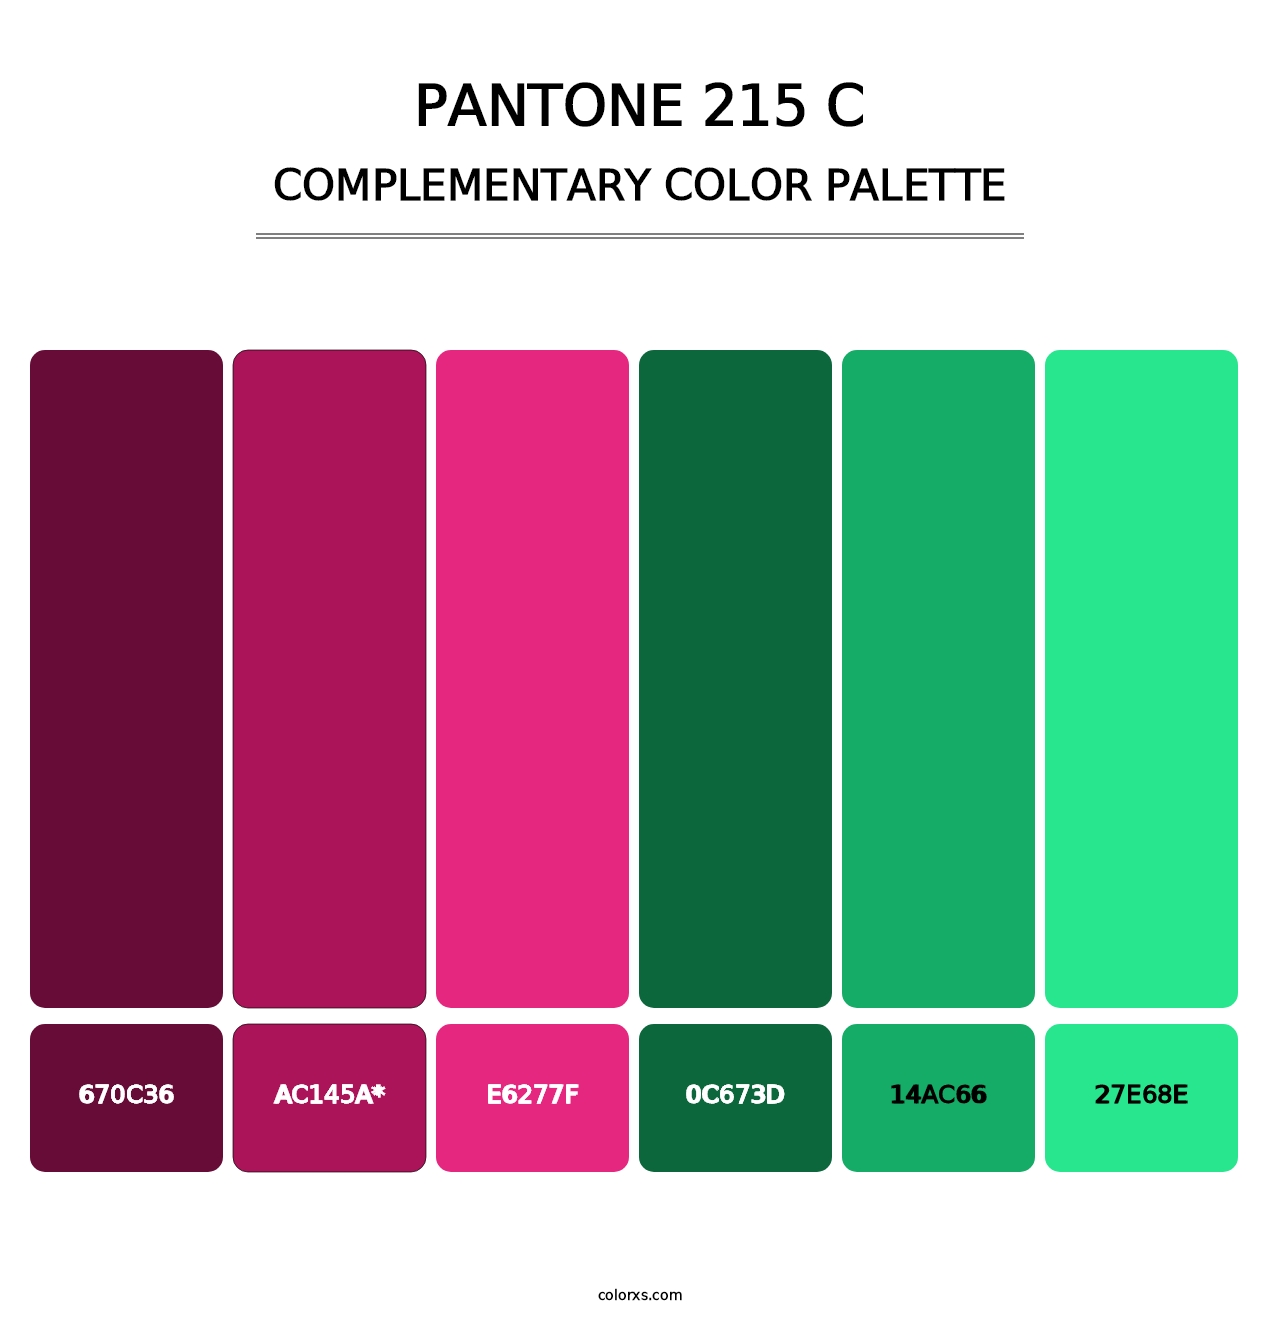 PANTONE 215 C - Complementary Color Palette